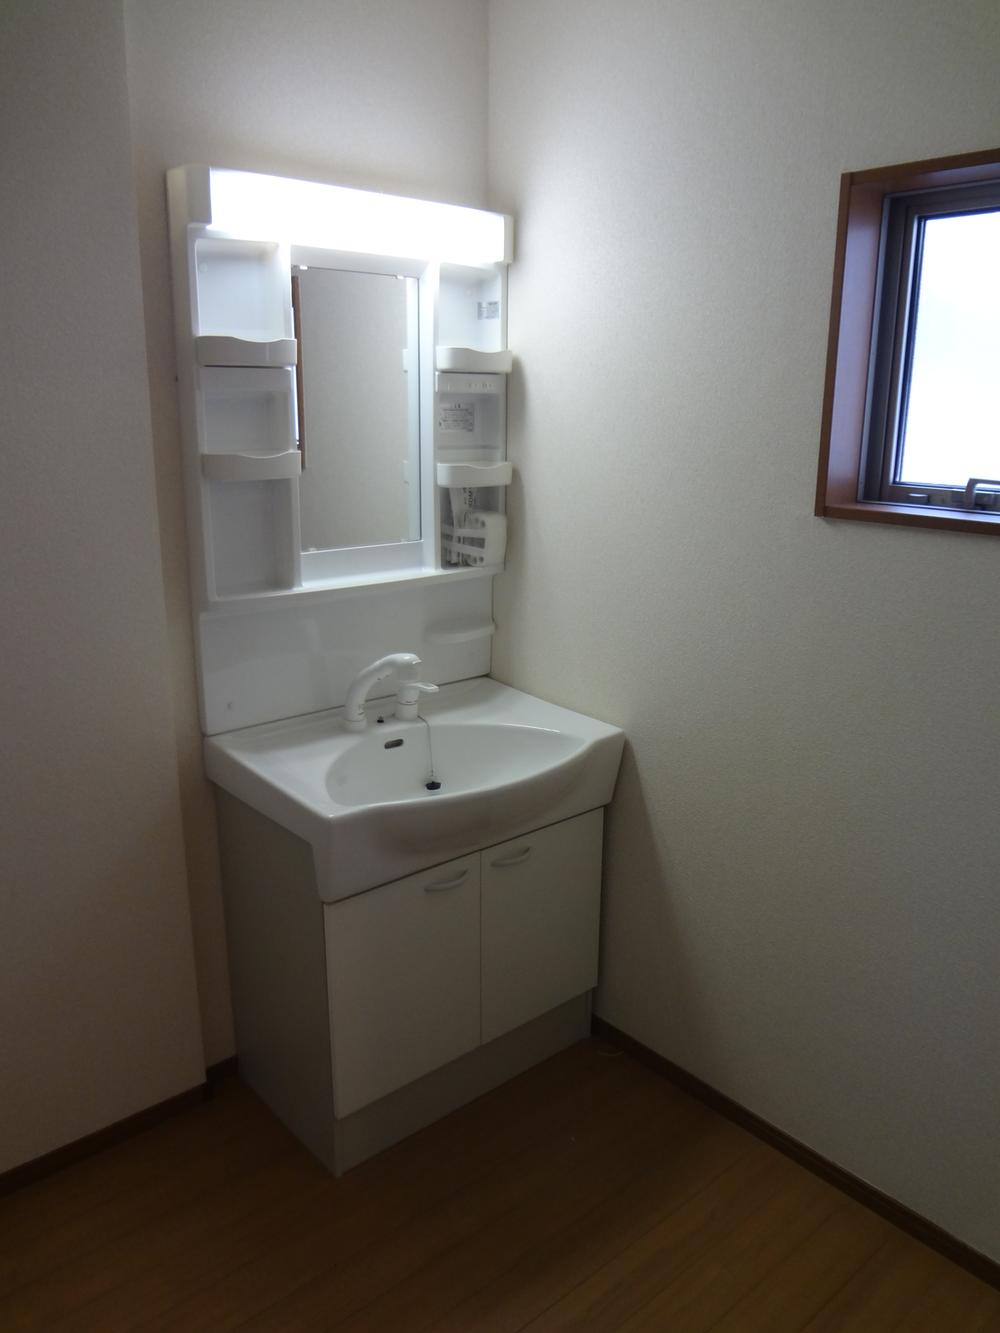 Wash basin, toilet. 1 Building same specifications washbasin